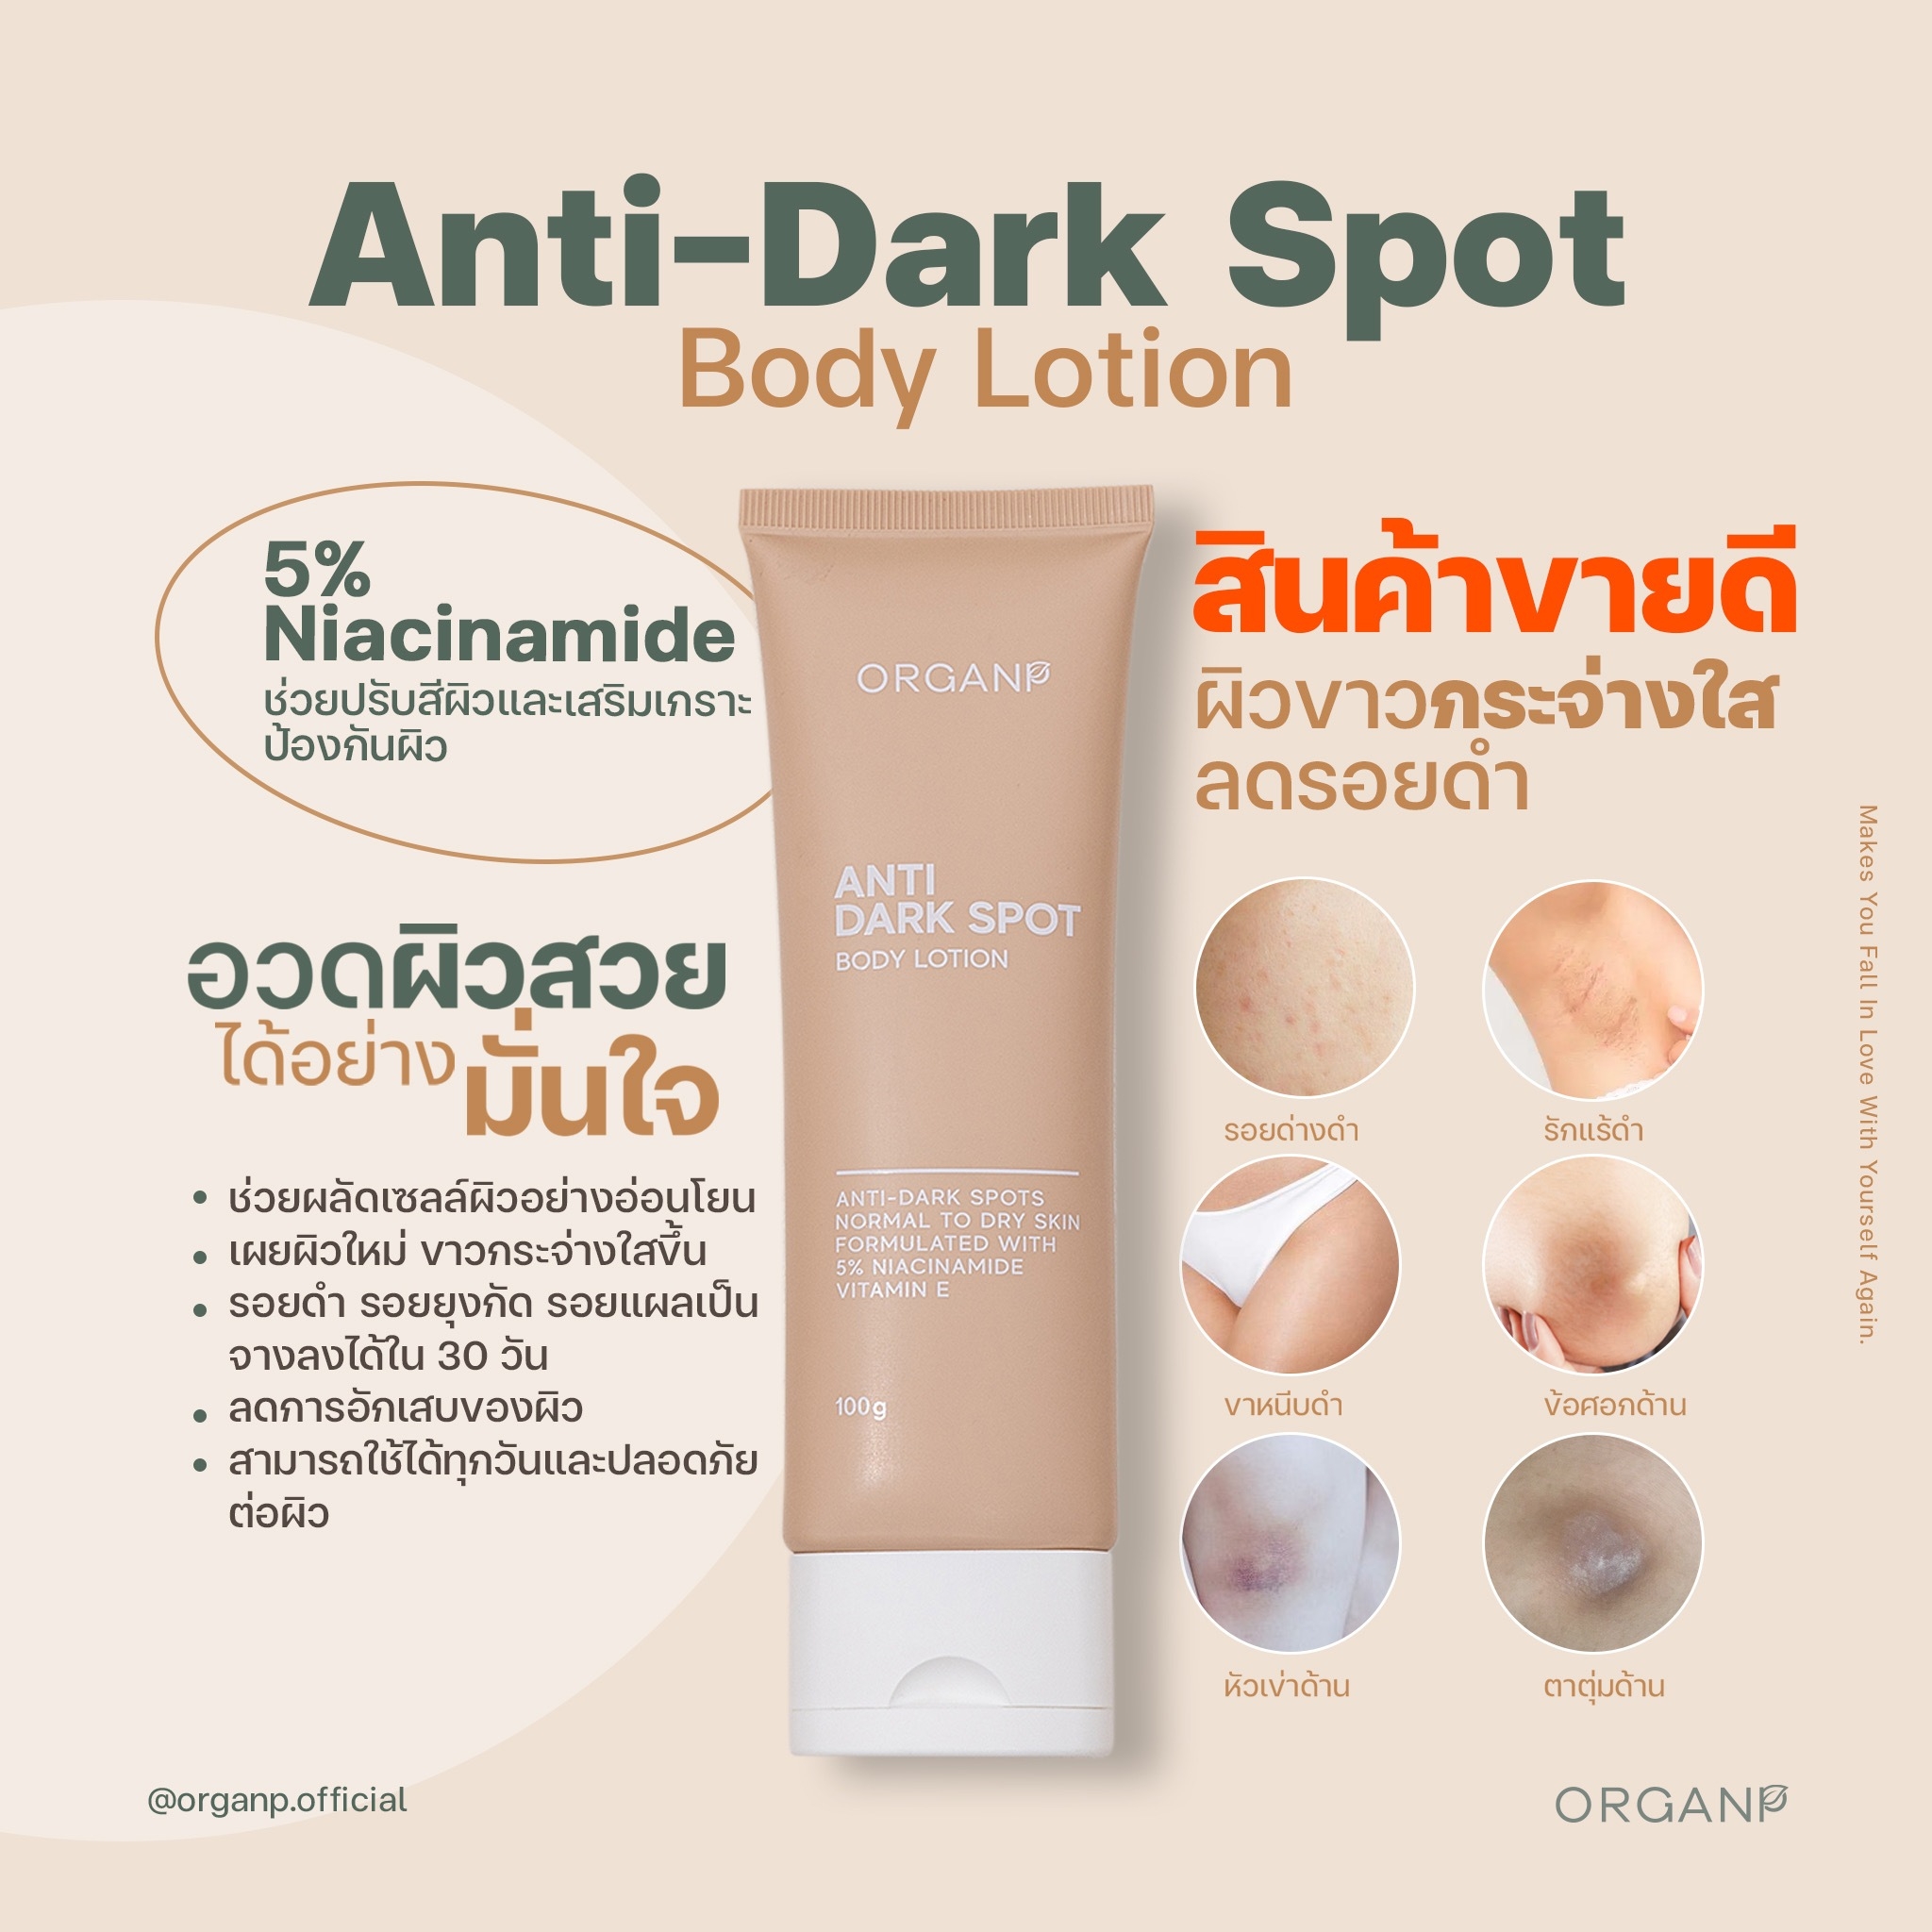 Anti-Dark spot Body Lotion